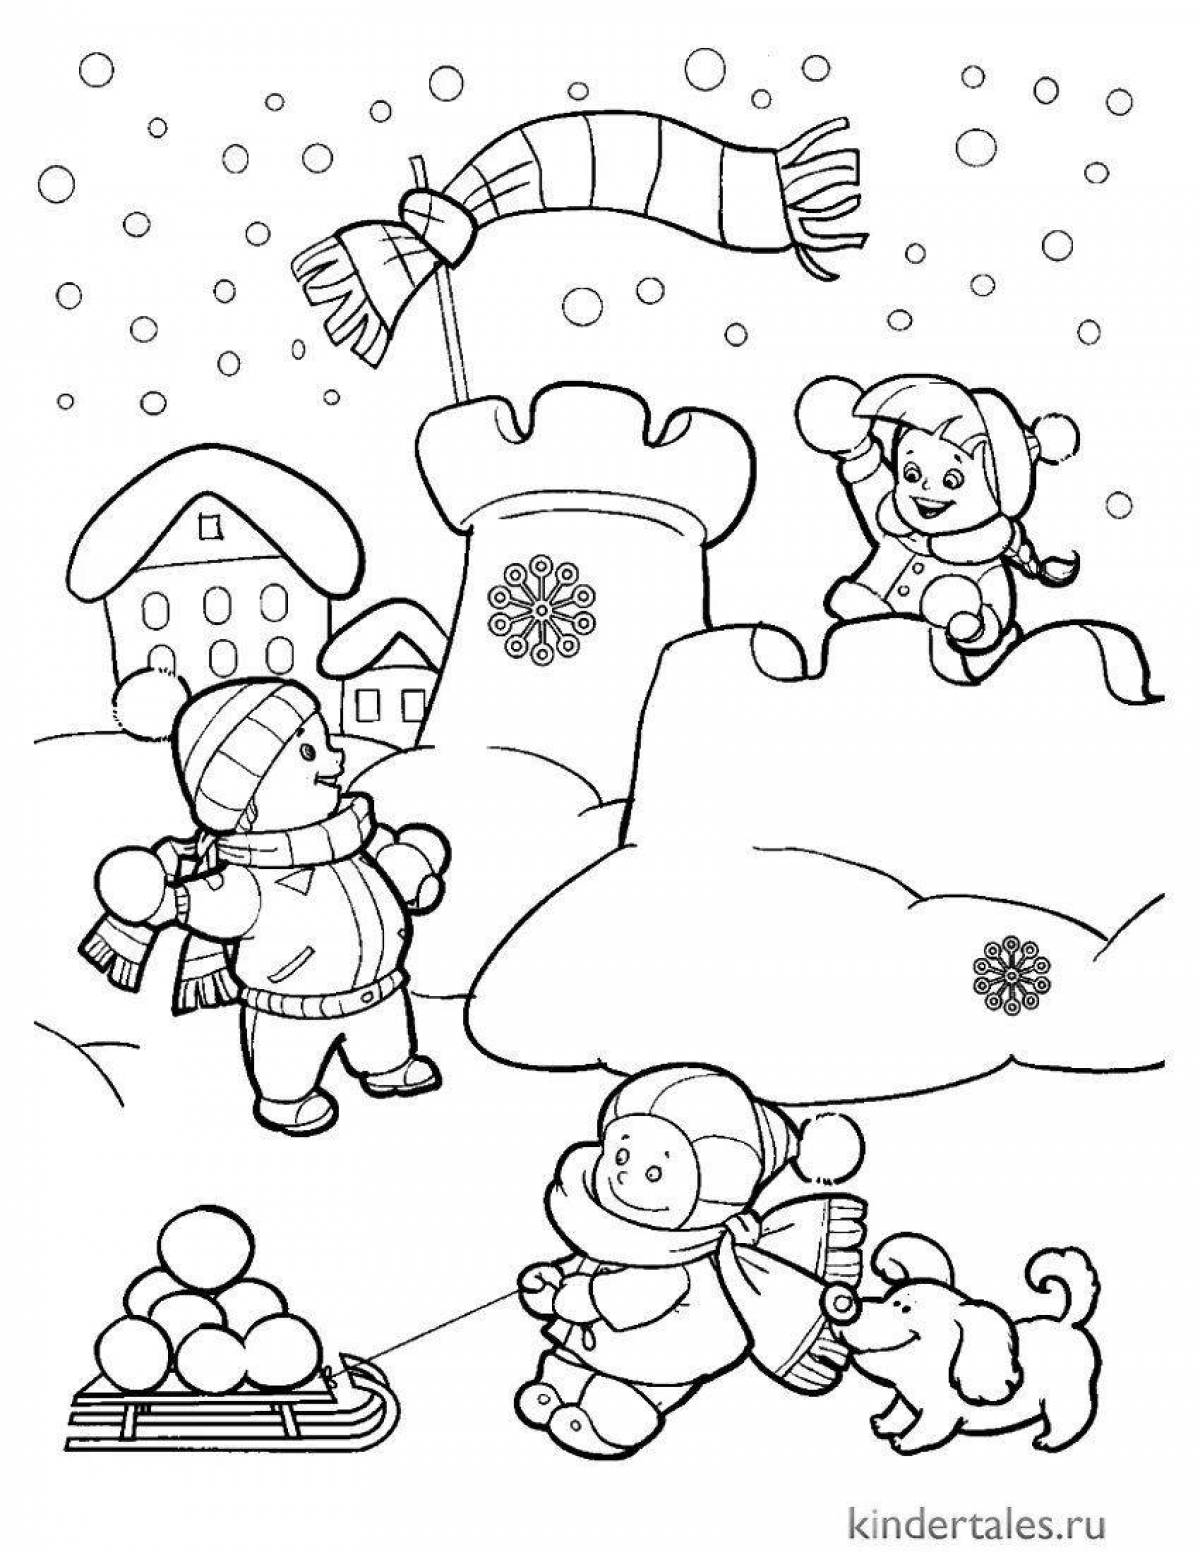 Children playing in winter #9